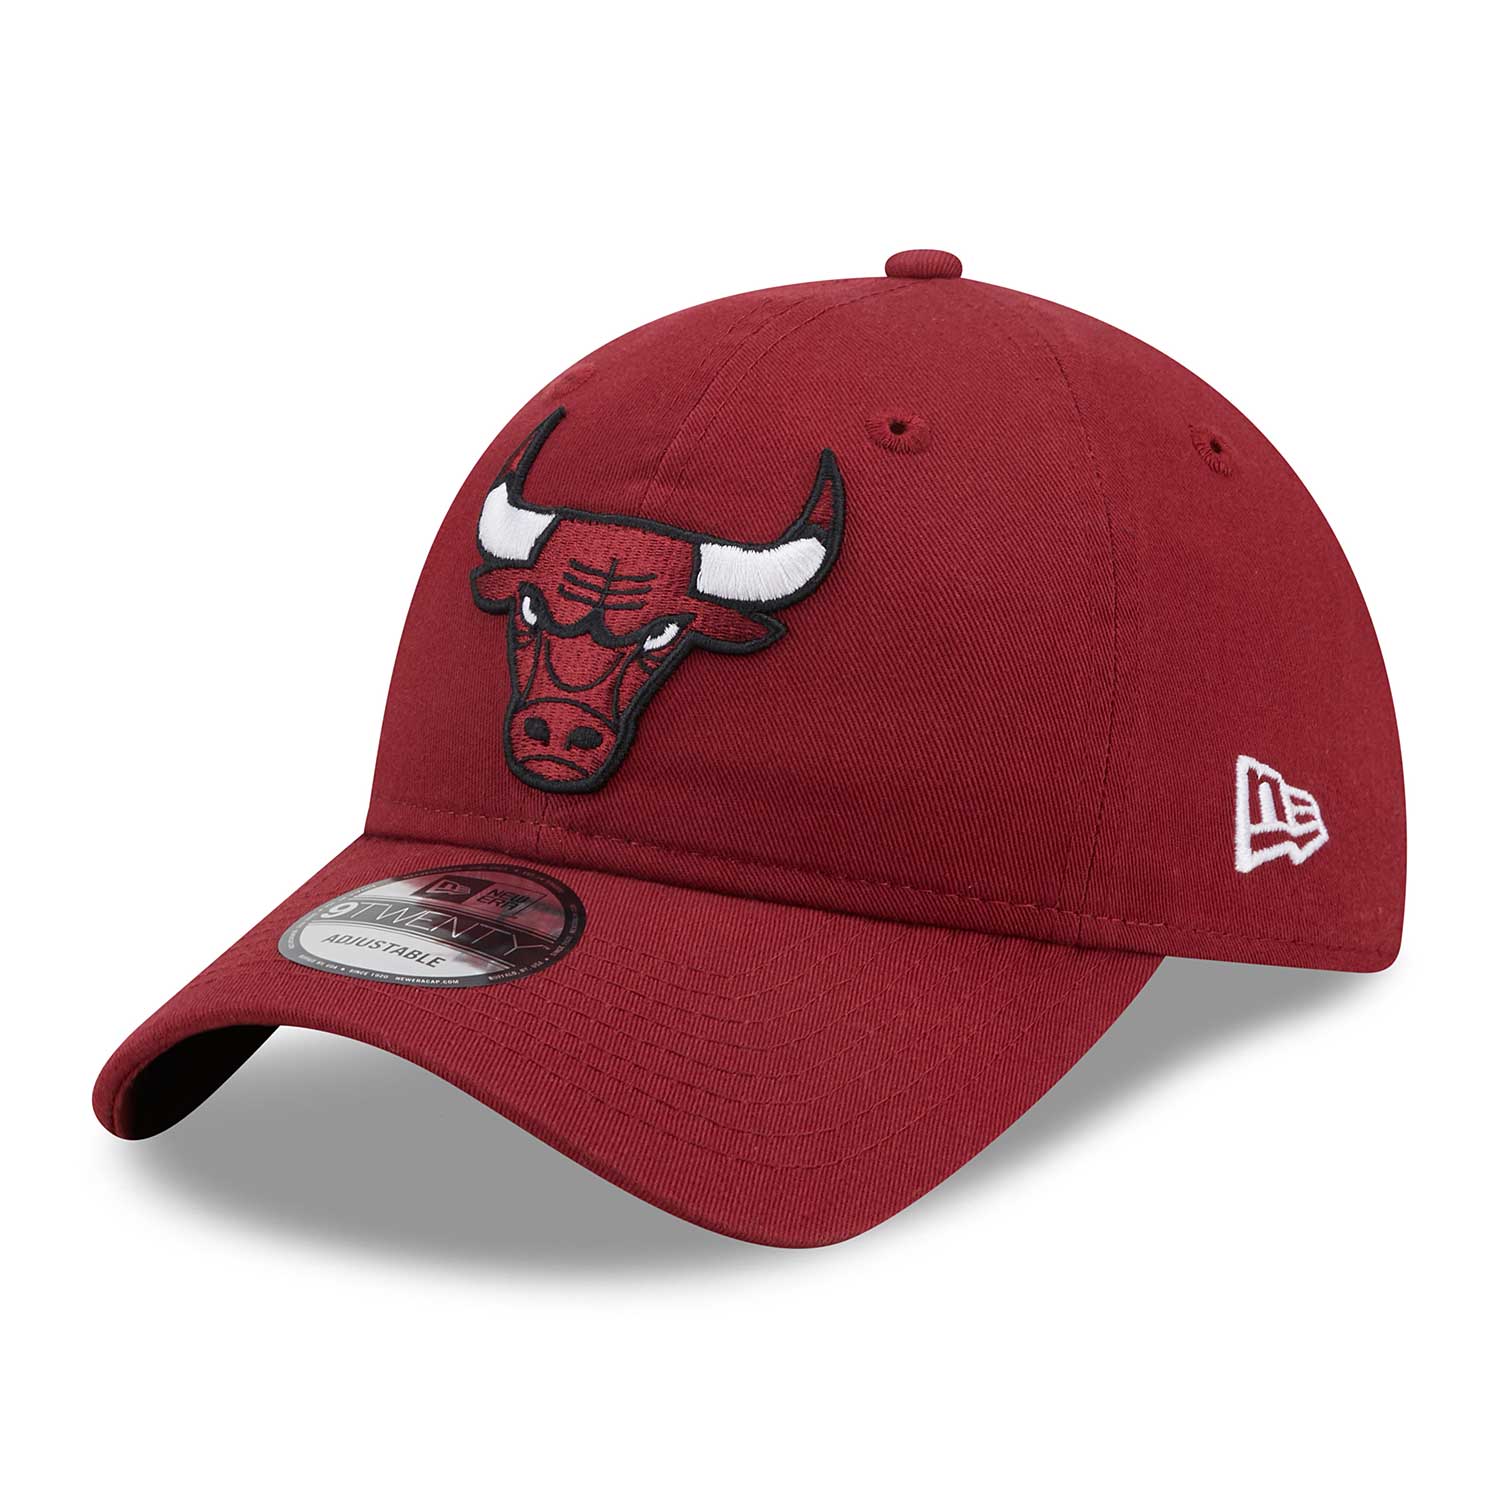 NBA New Era Logo Man 9TWENTY Adjustable Hat - Black